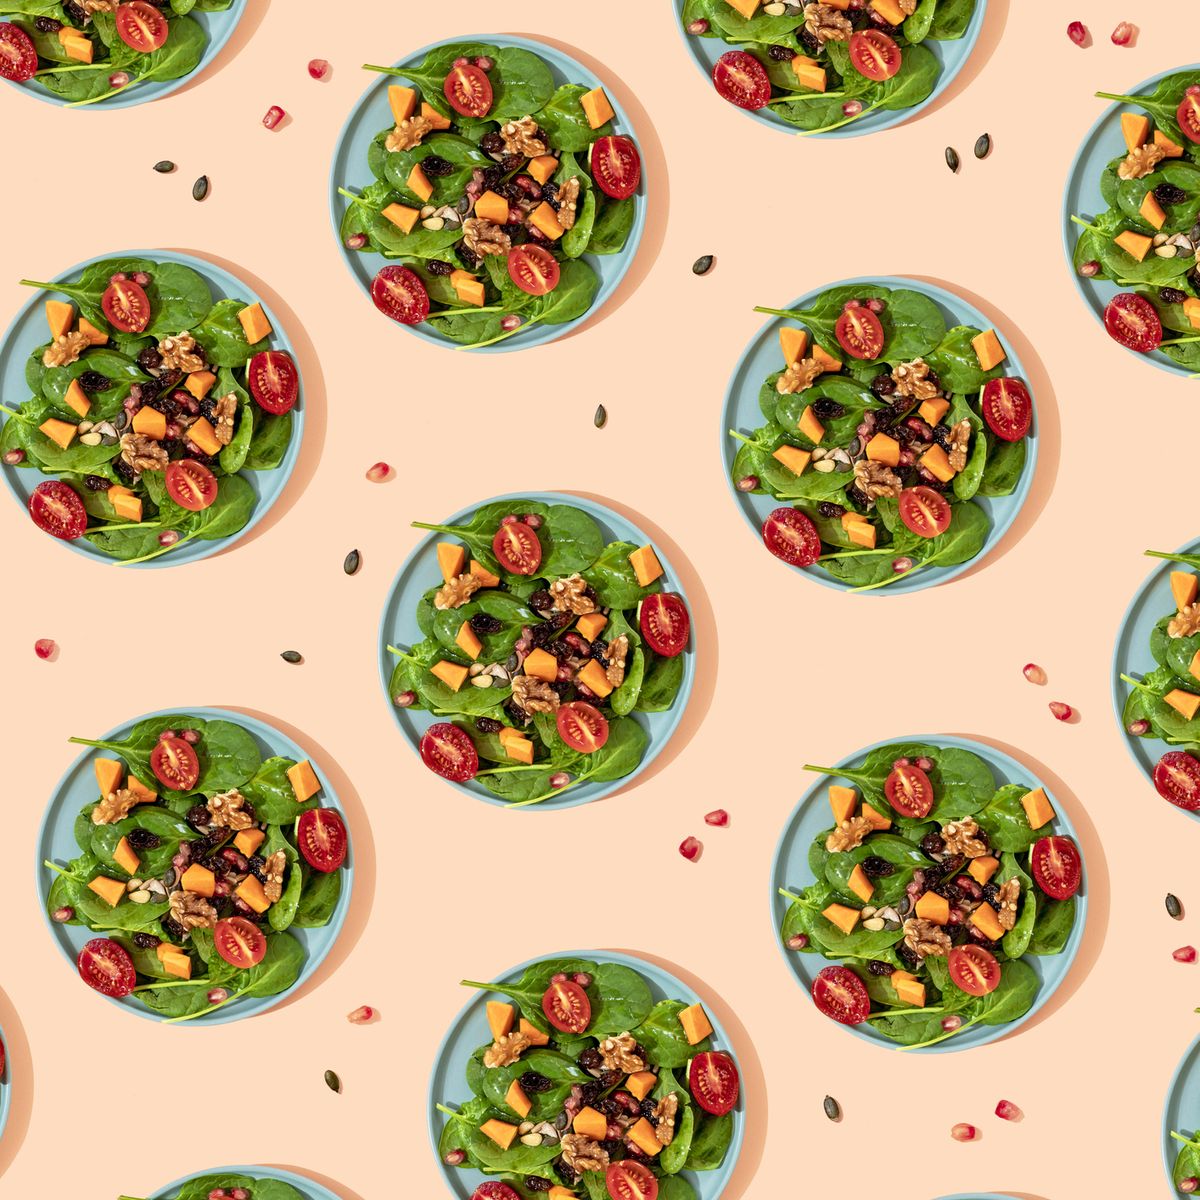 portion size vs serving size, pattern of plates of fresh readytoeat vegan salad